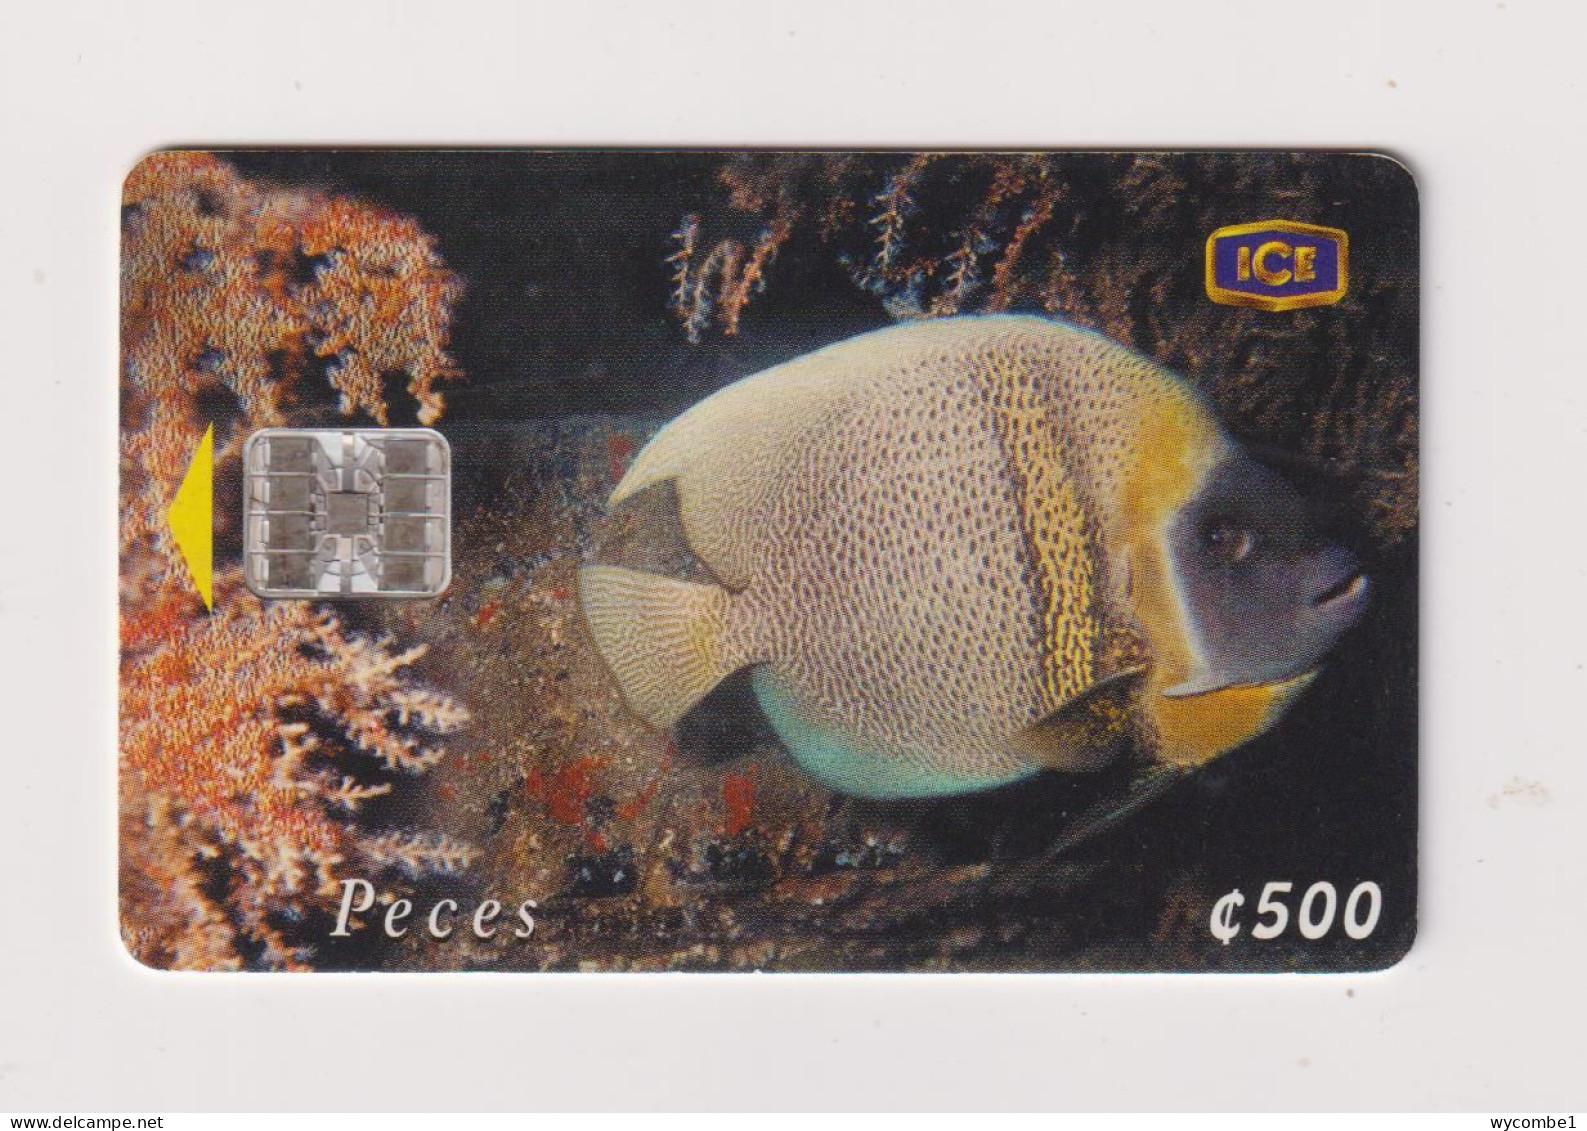 COSTA RICA -   Fish Chip Phonecard - Costa Rica